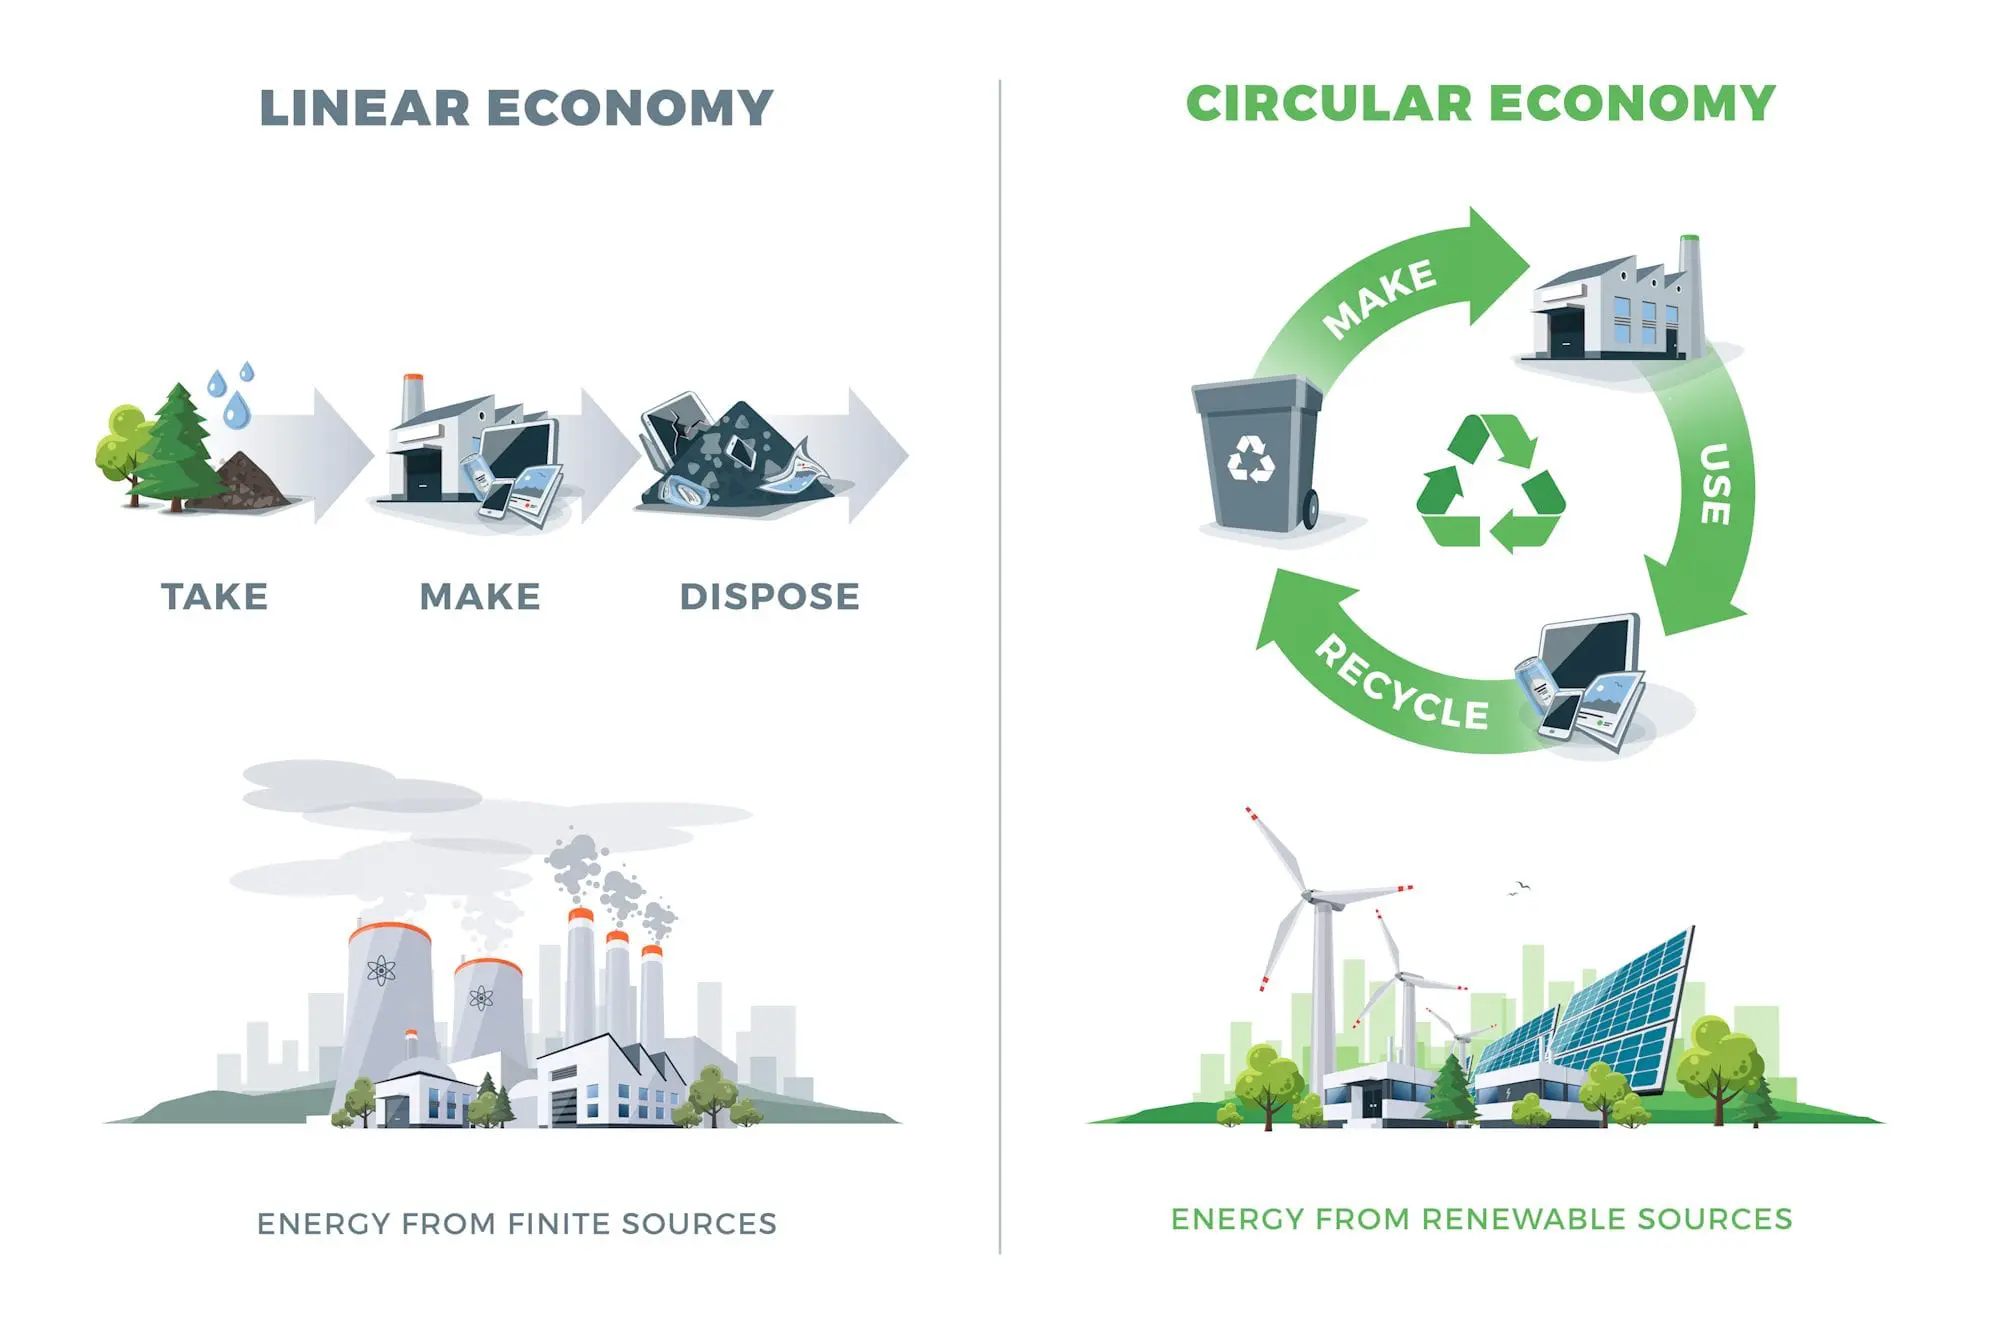 Image of linear economy versus circular economyerstock